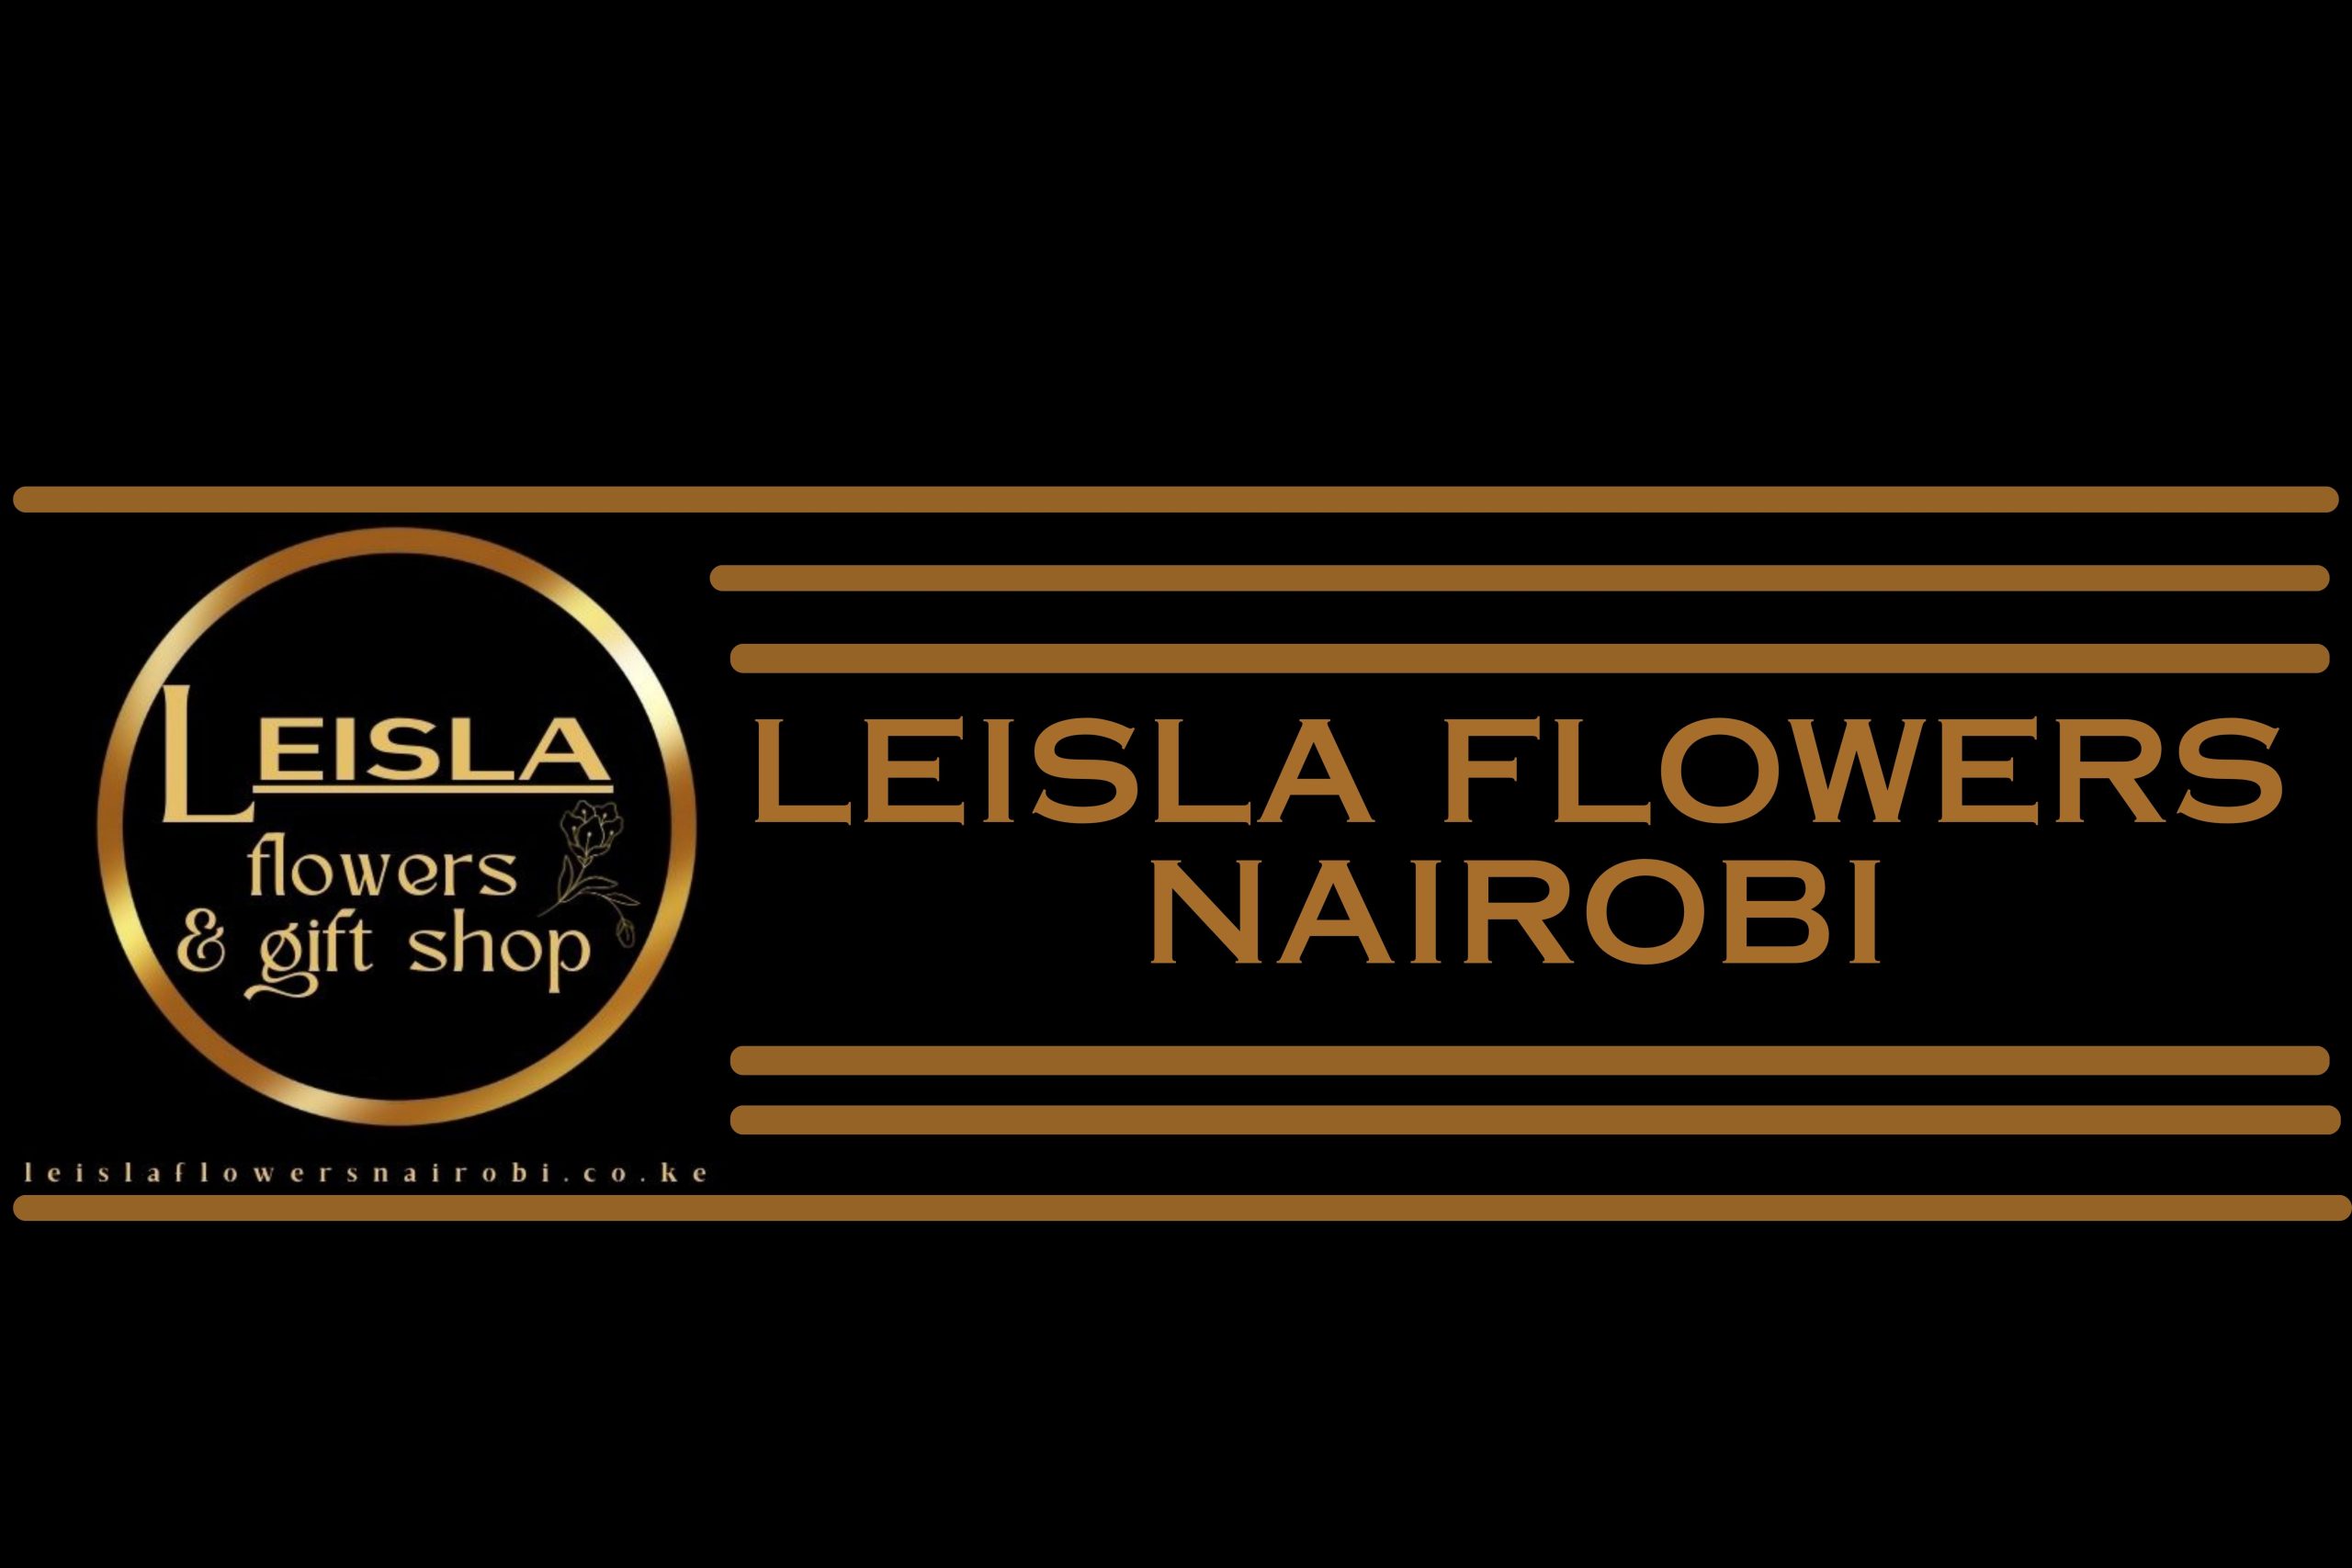 Leisla Flowers & Gift Shop Kenya